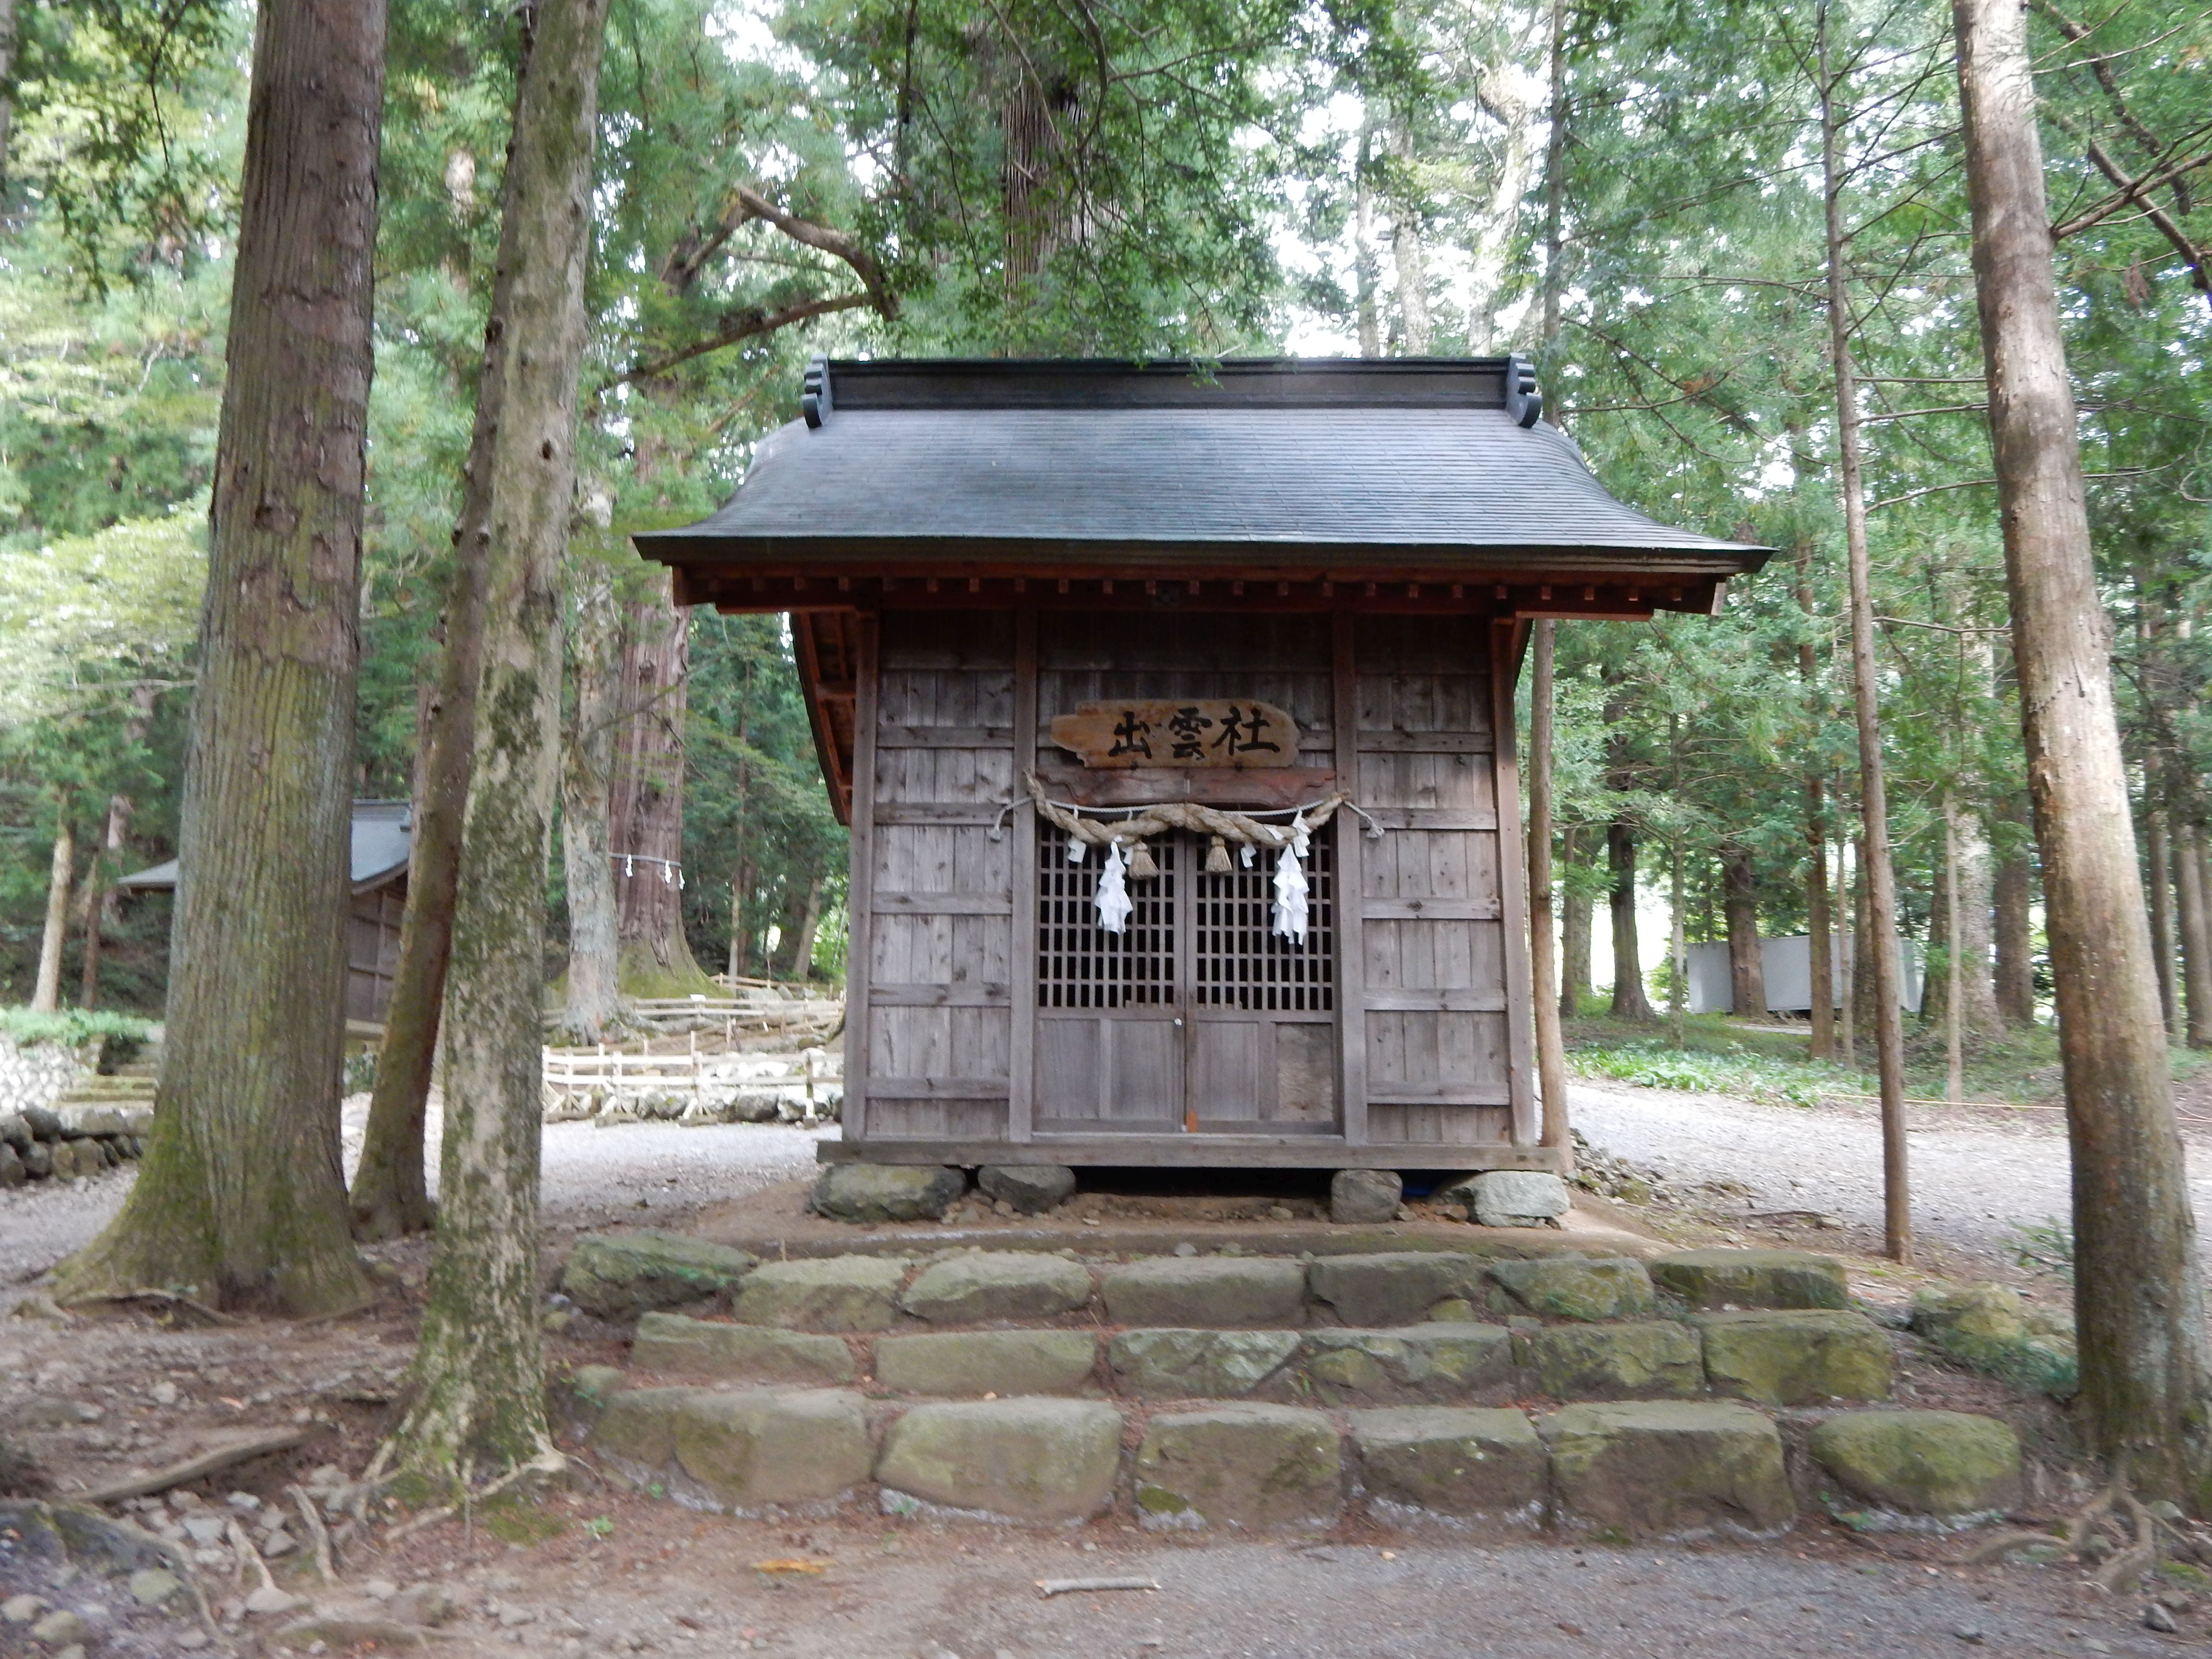 The Asama Shrine